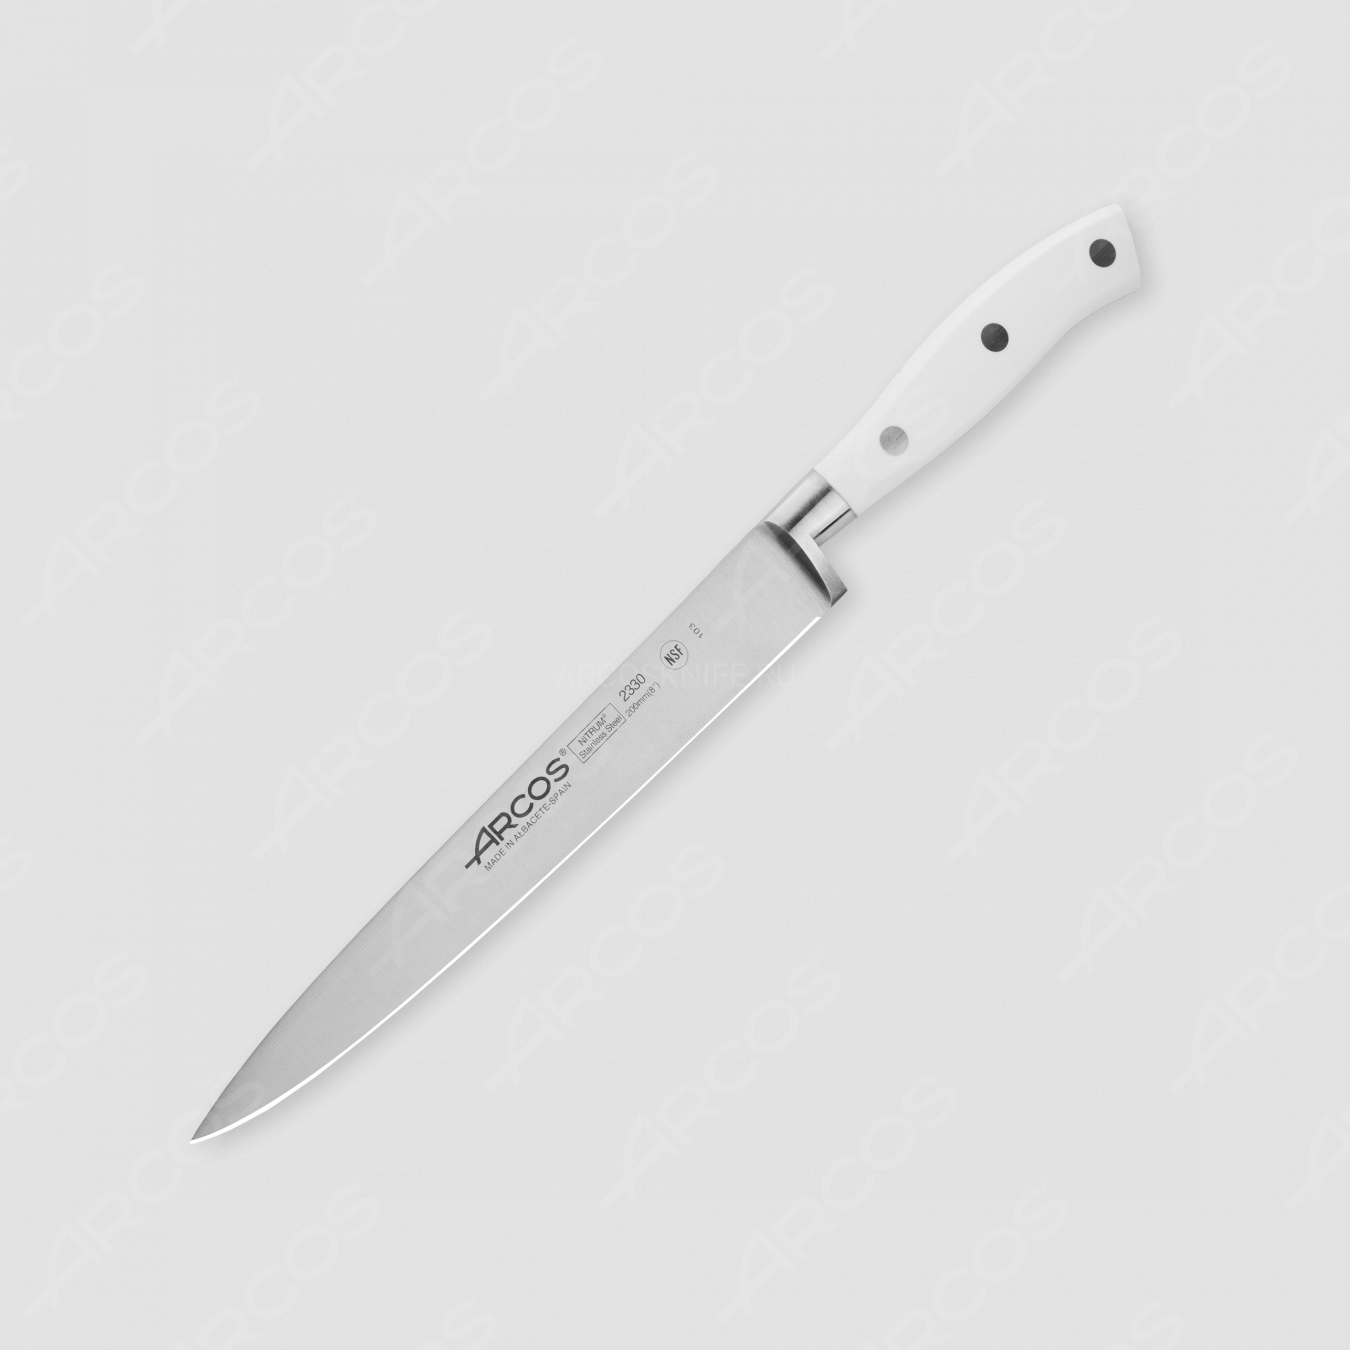 Нож кухонный для нарезки мяса 20 см, серия Riviera Blanca, ARCOS, Испания